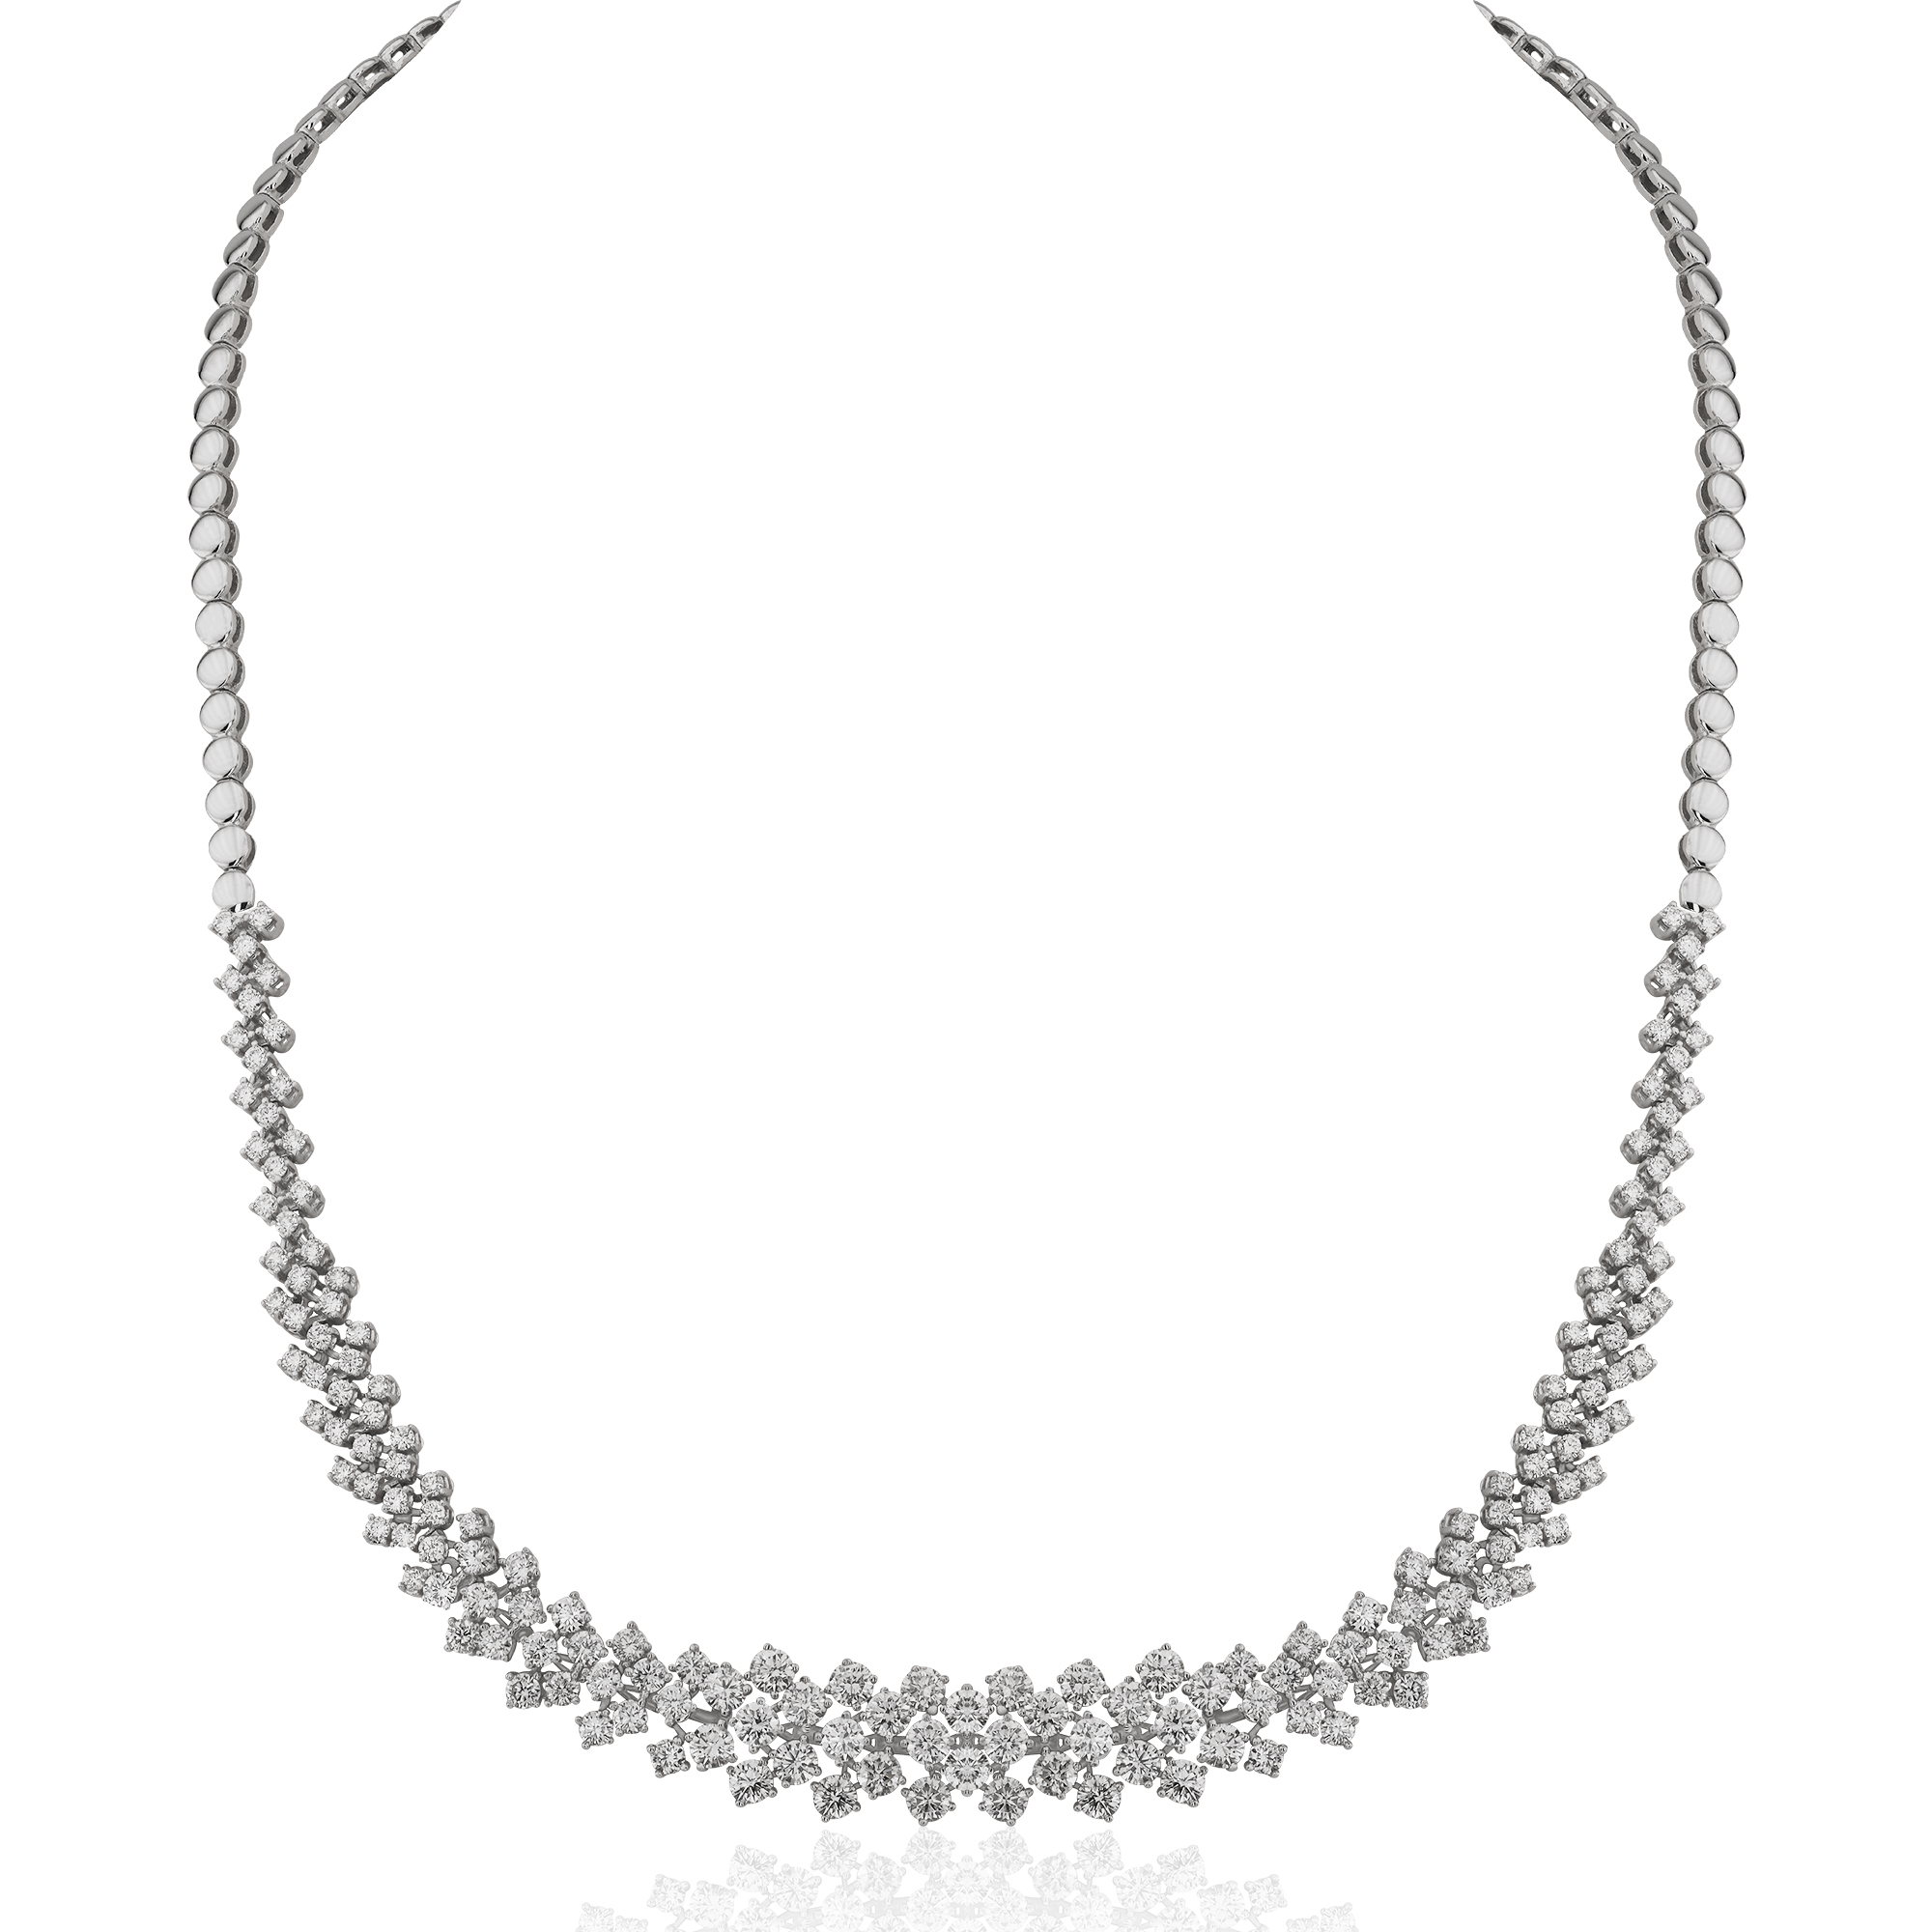 7,14 Ct. Diamond Design Necklace